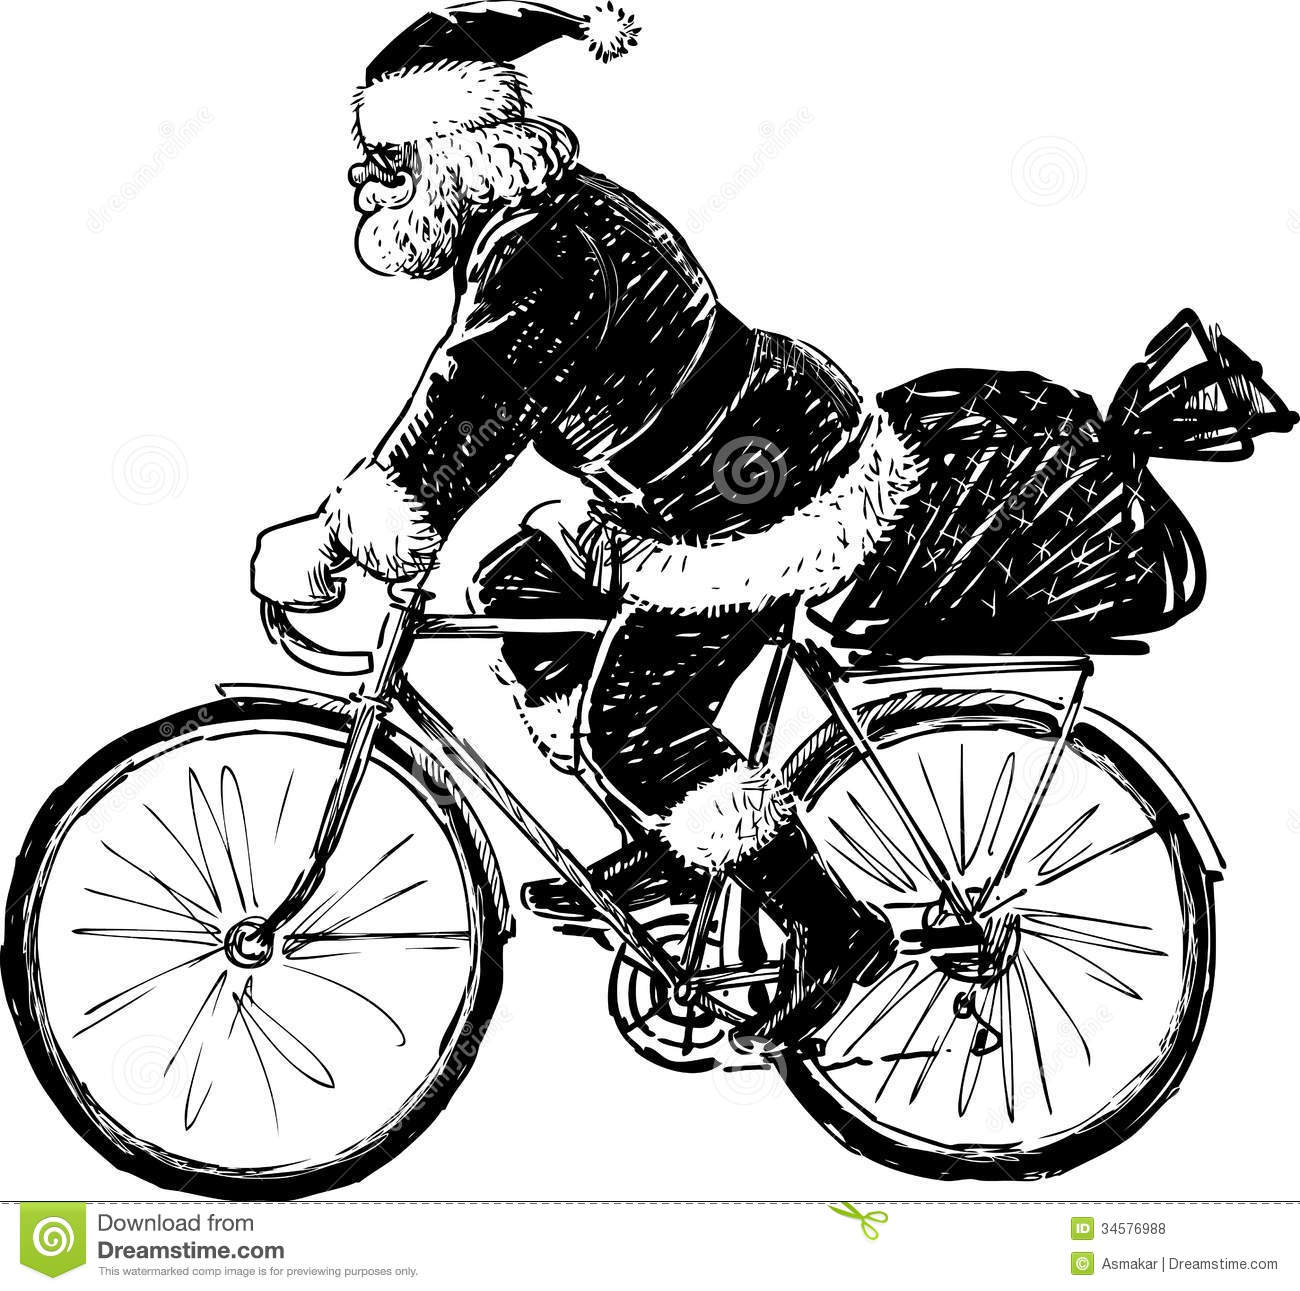 Santa Claus Riding A Bicycle Royalty Free Stock Photos   Image    